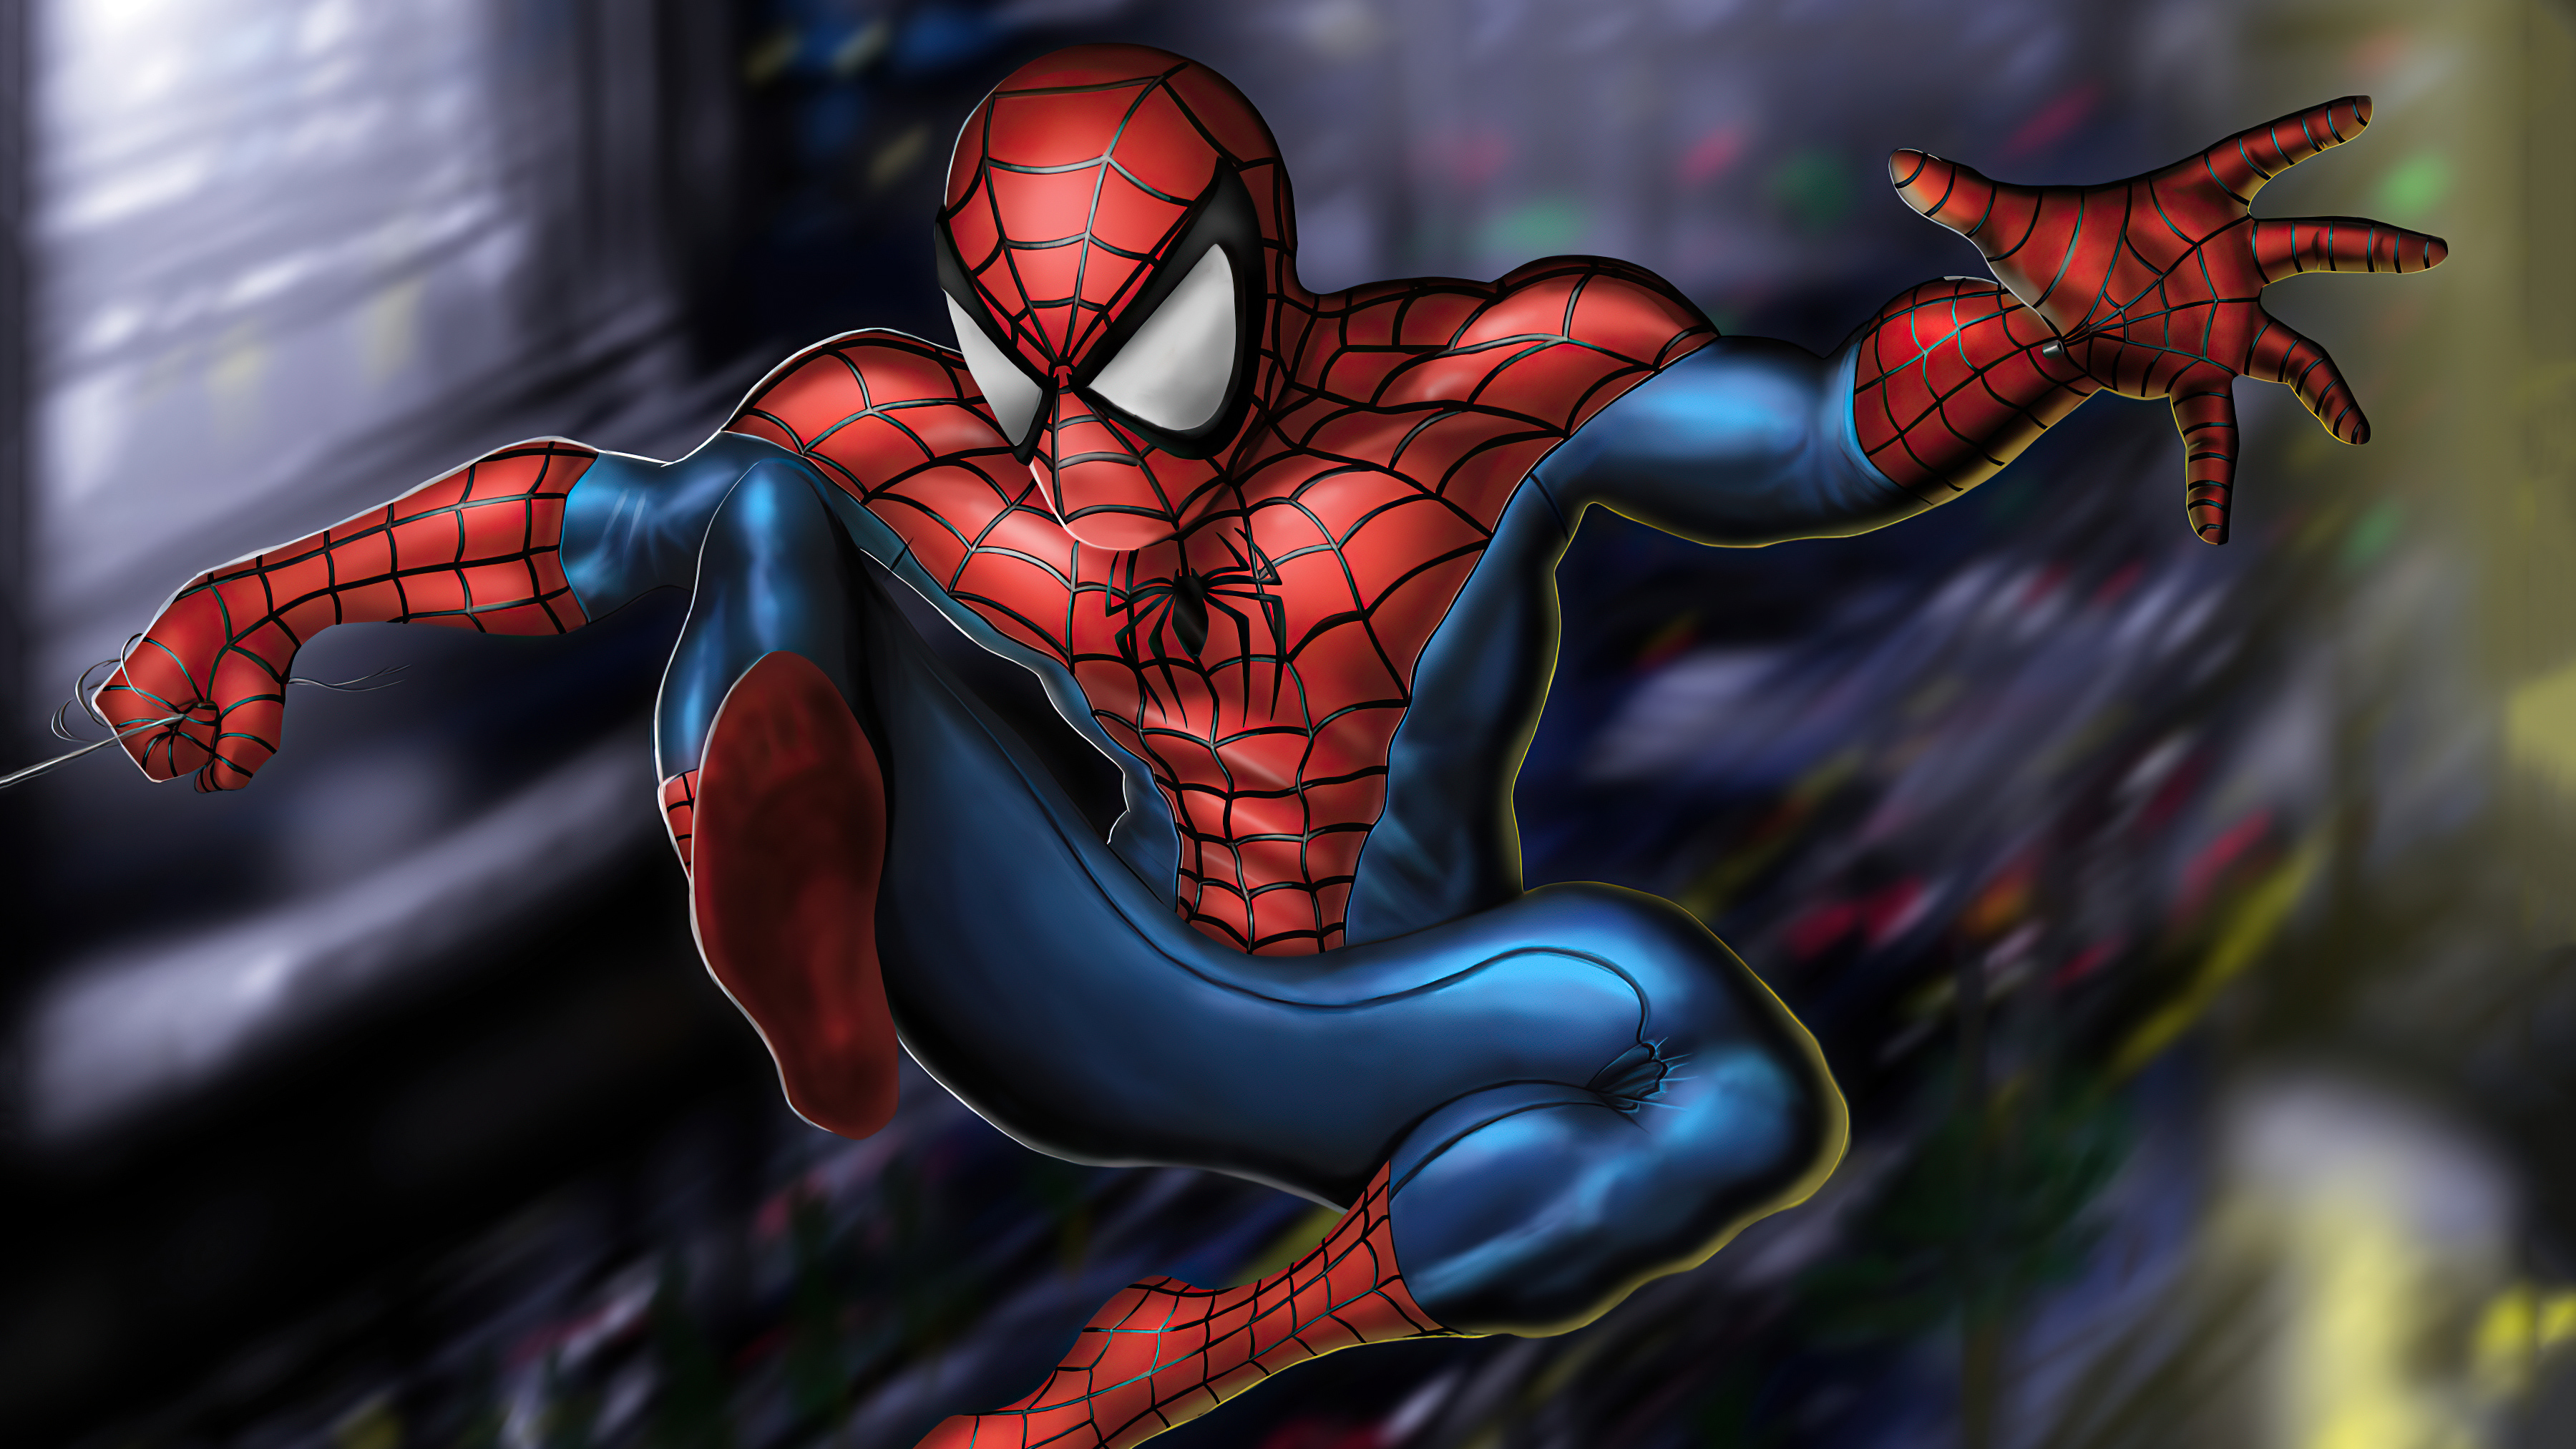 Spider-Man HD Wallpaper by Allan Vanyes